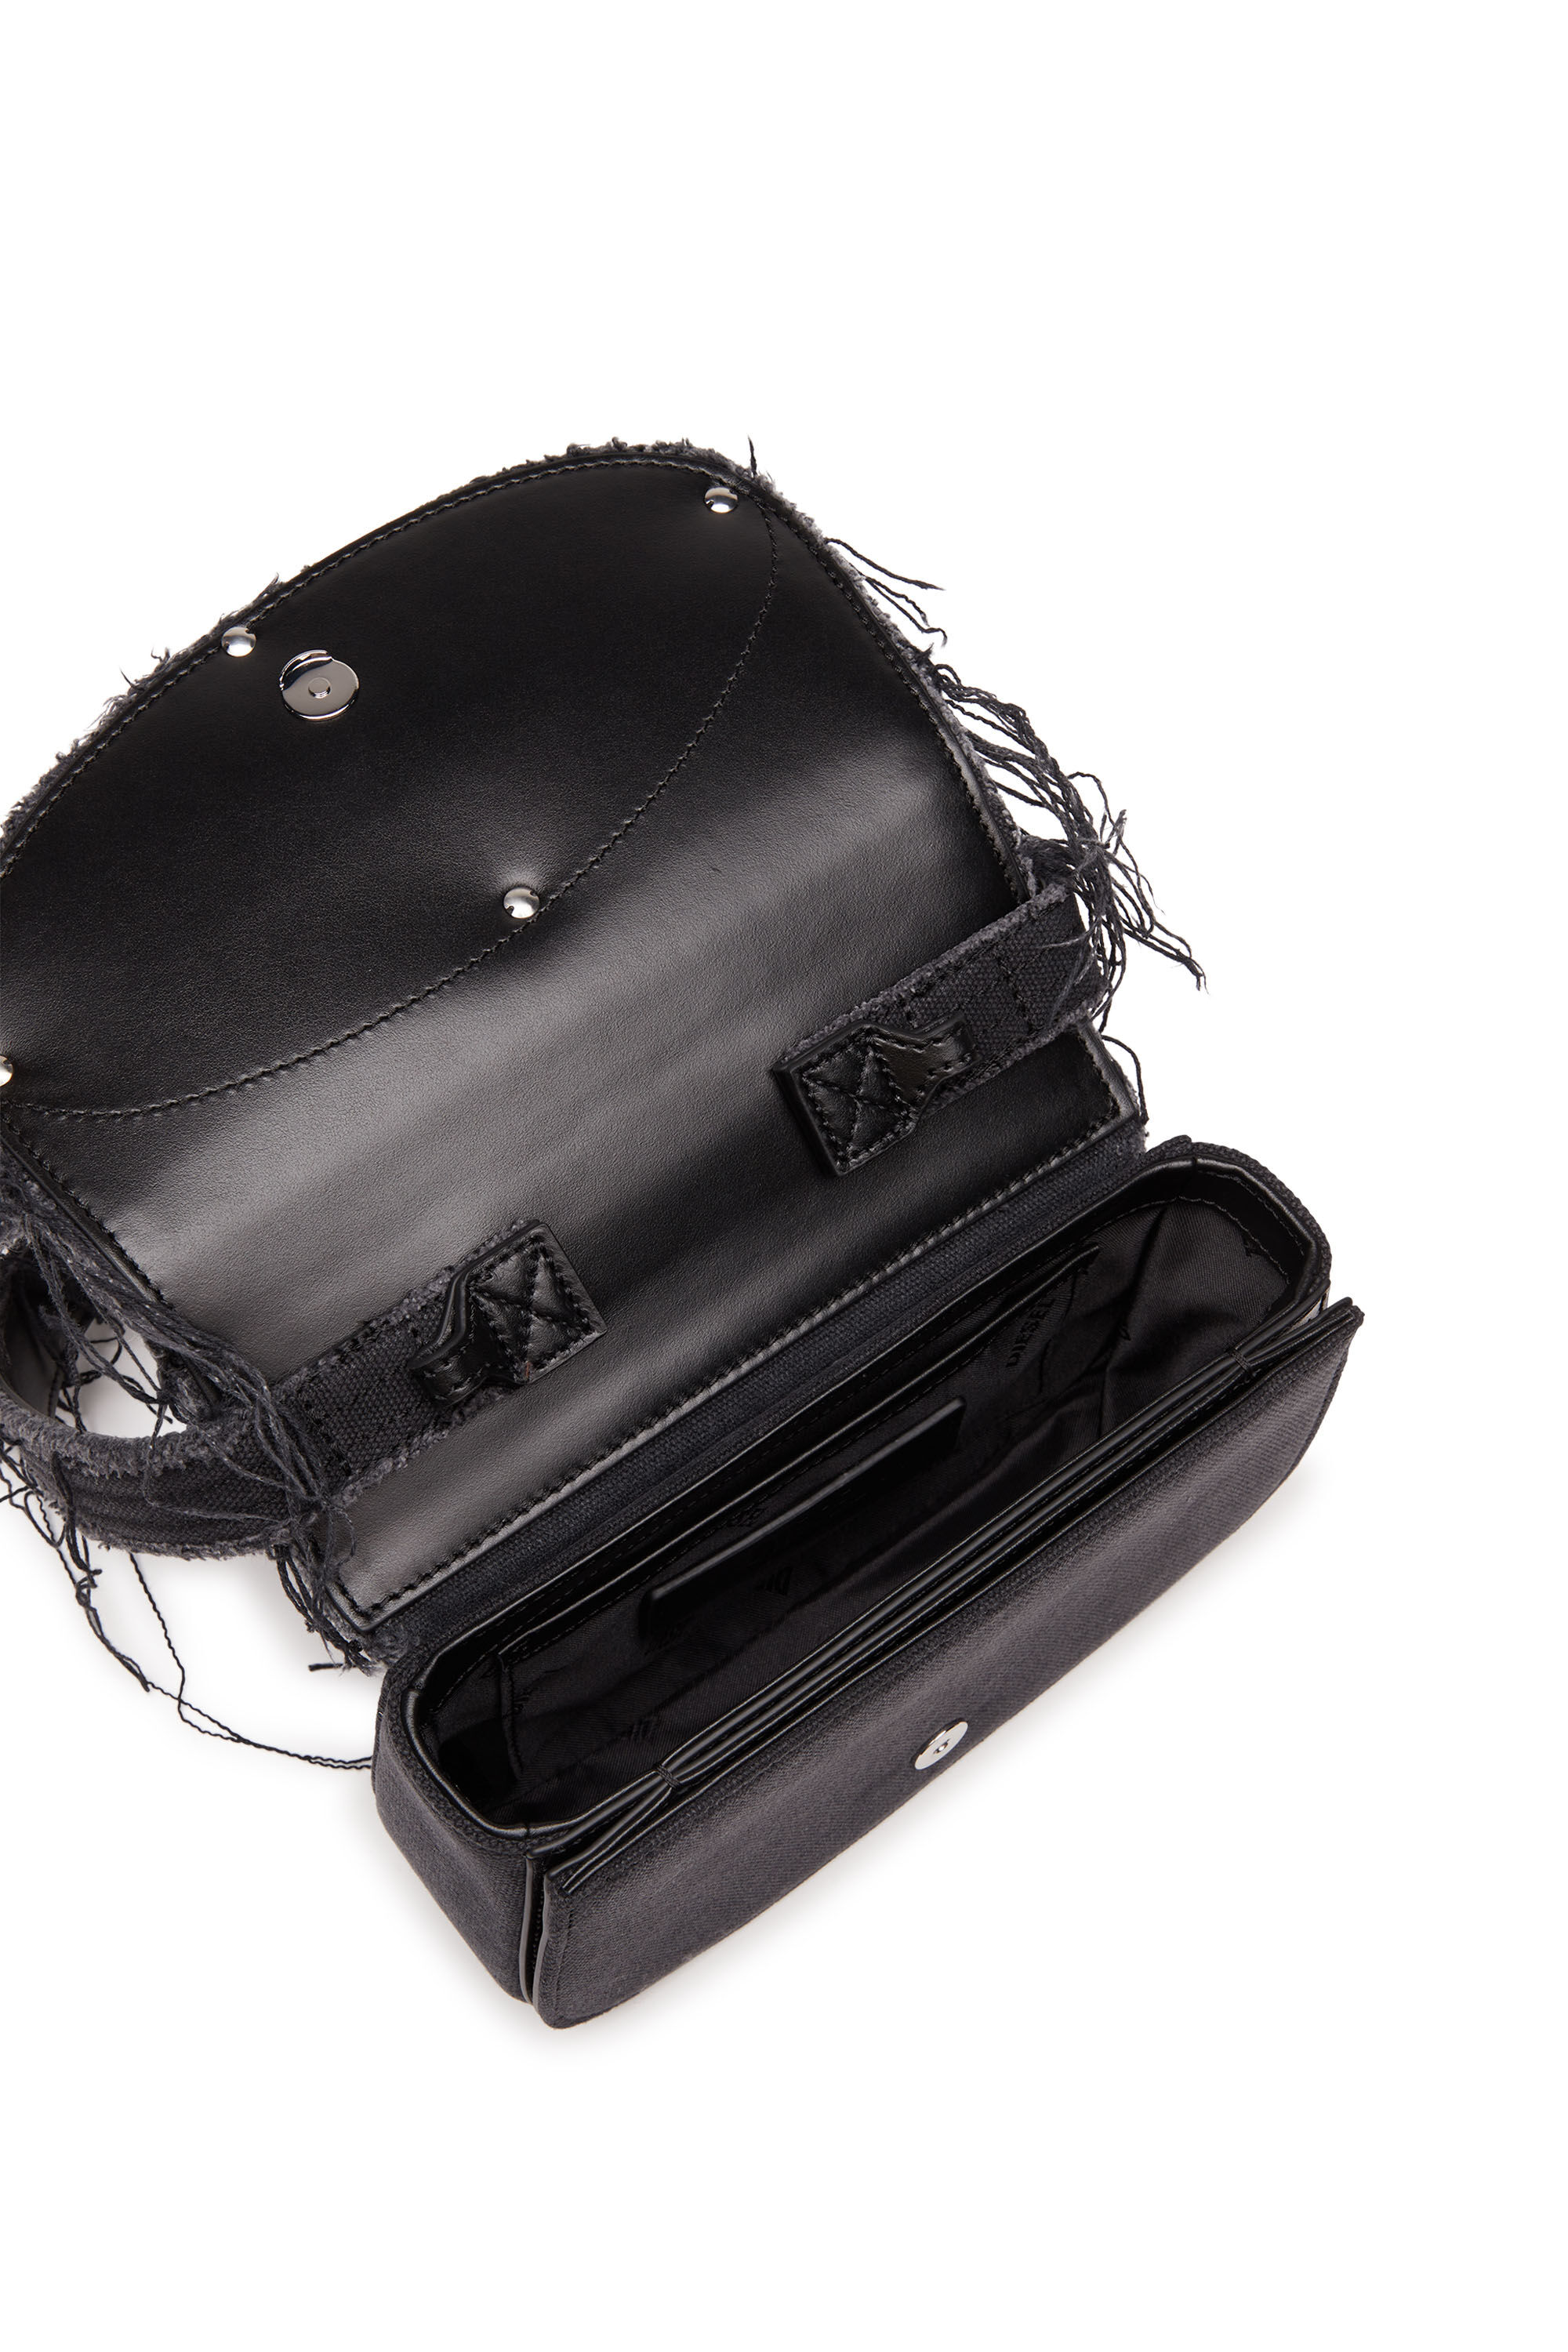 Diesel Black 1DR Bag